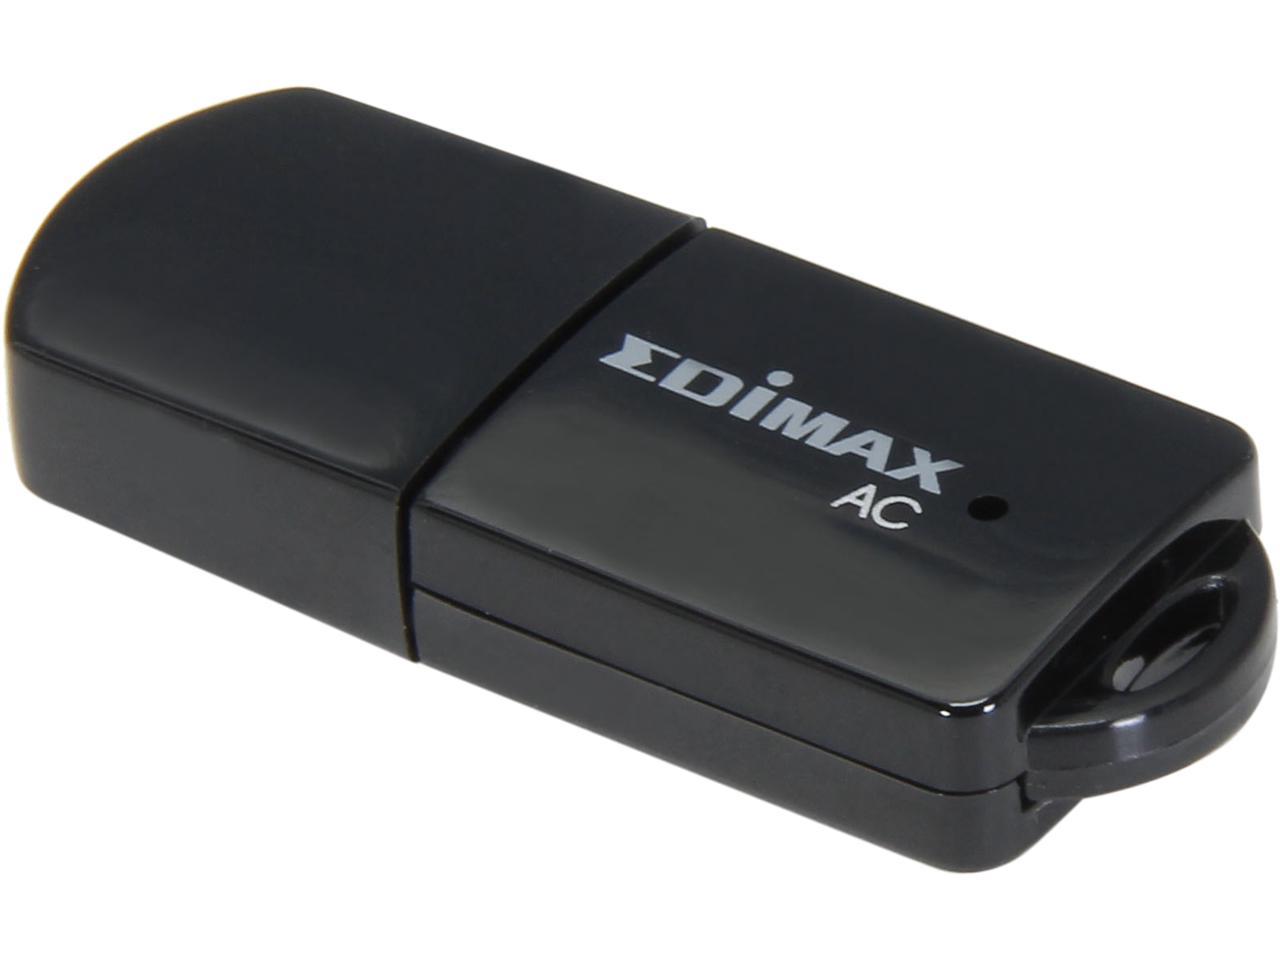 Ac600 Dual Band Wireless USB Adapter. Wi-Fi адаптер Edimax EW-7811utc. Edimax ac600 Wireless lan USB Adapter. Dual Band USB Adapter 600. 5ггц адаптер